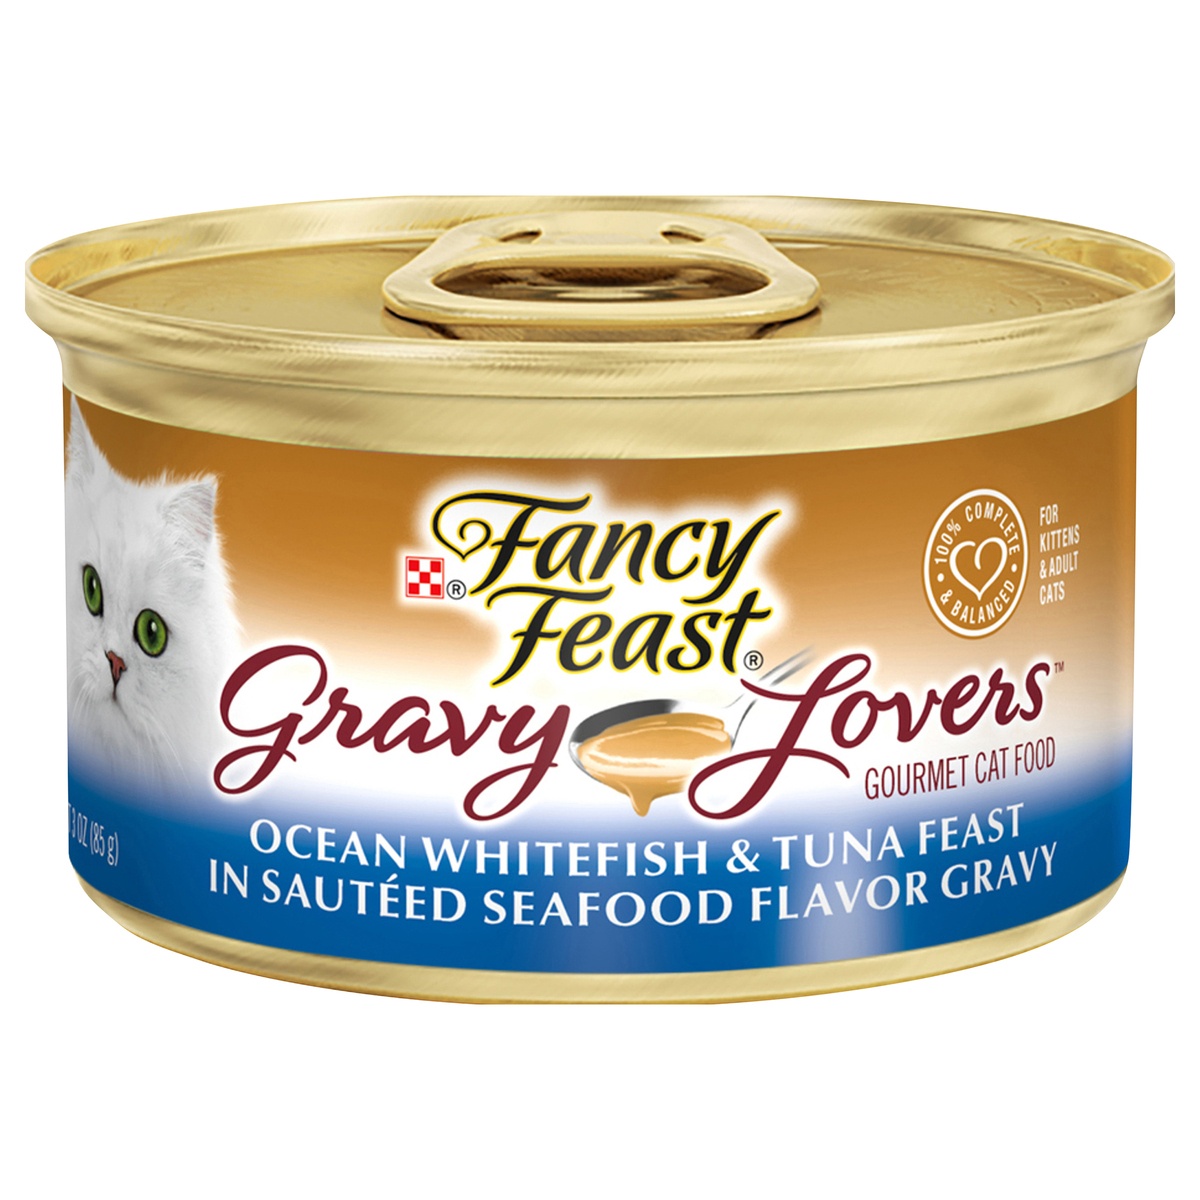 slide 5 of 5, Fancy Feast Gravy Lovers Ocean Whitefish & Tuna Feast in Sauteed Seafood Flavor Gravy Cat Food, 3 oz